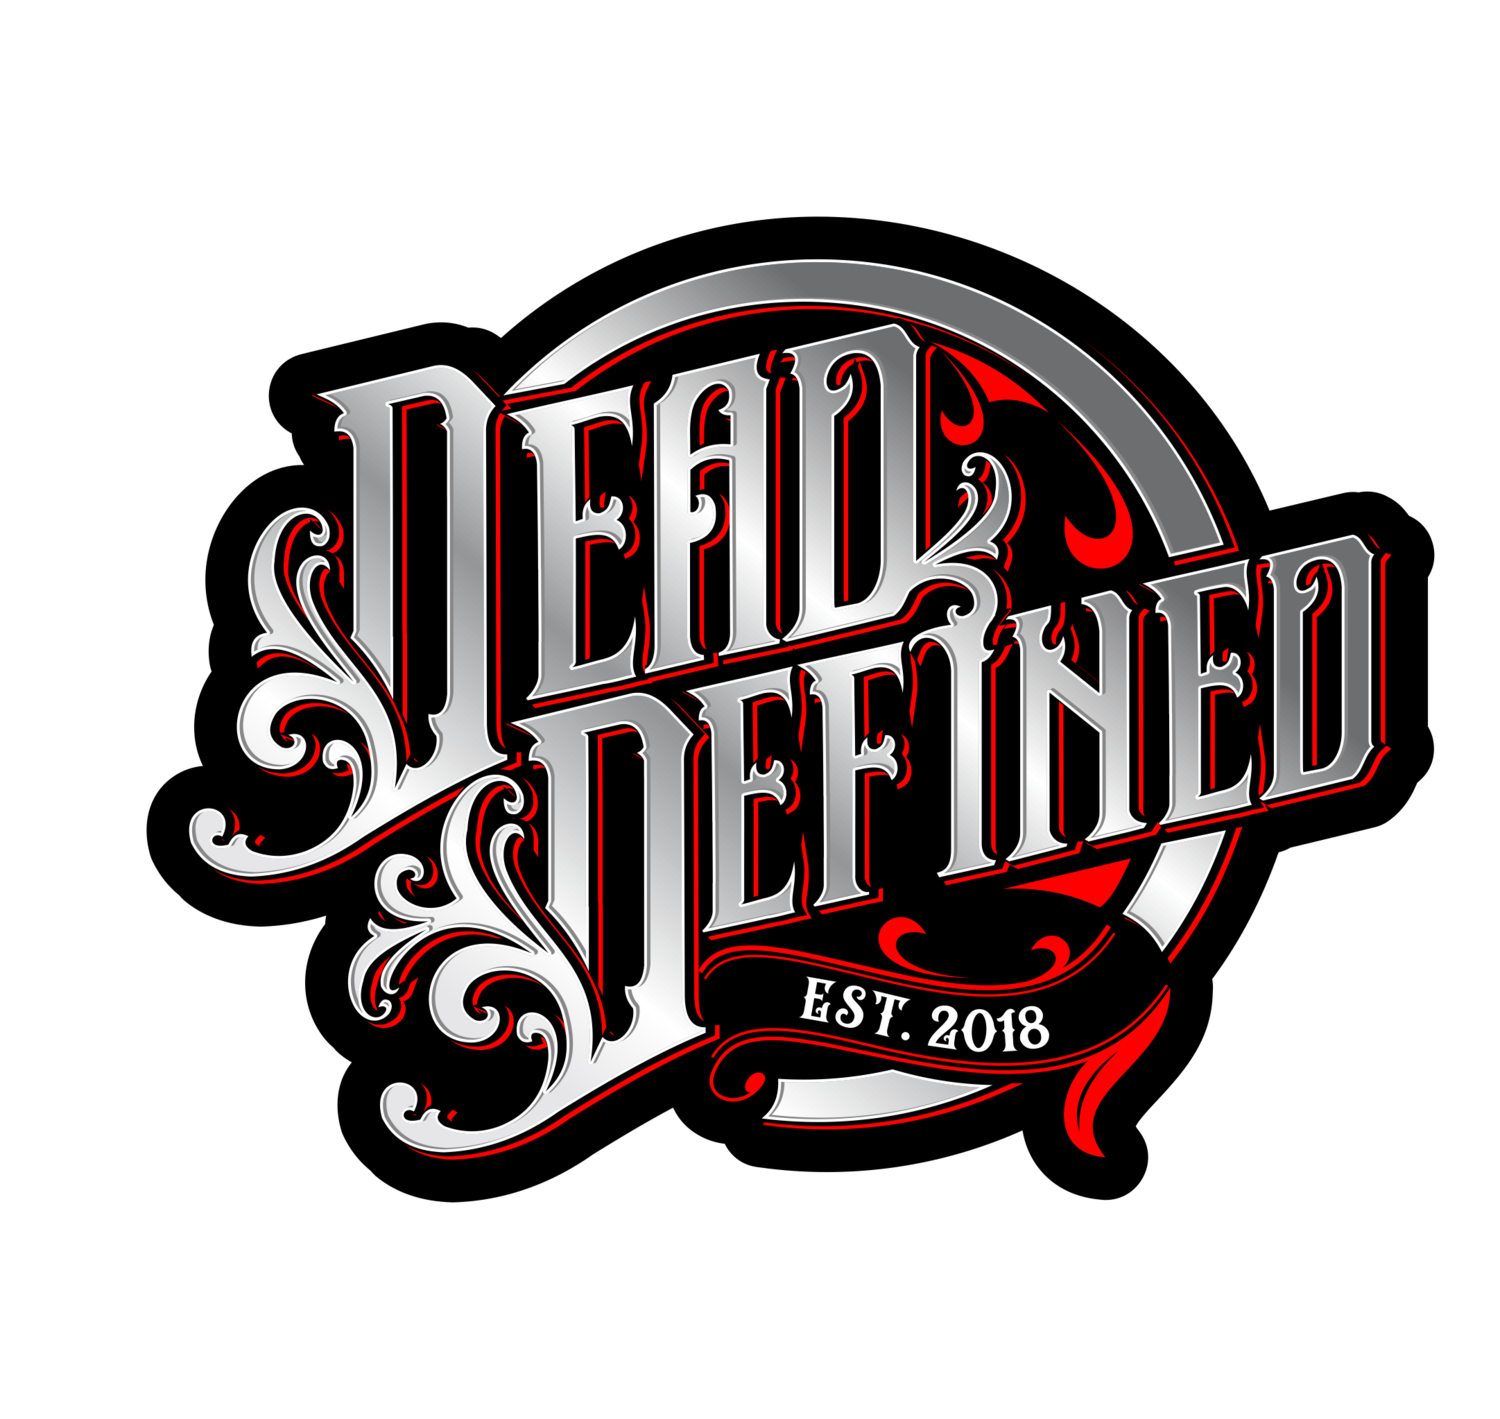 www.deaddefined.com